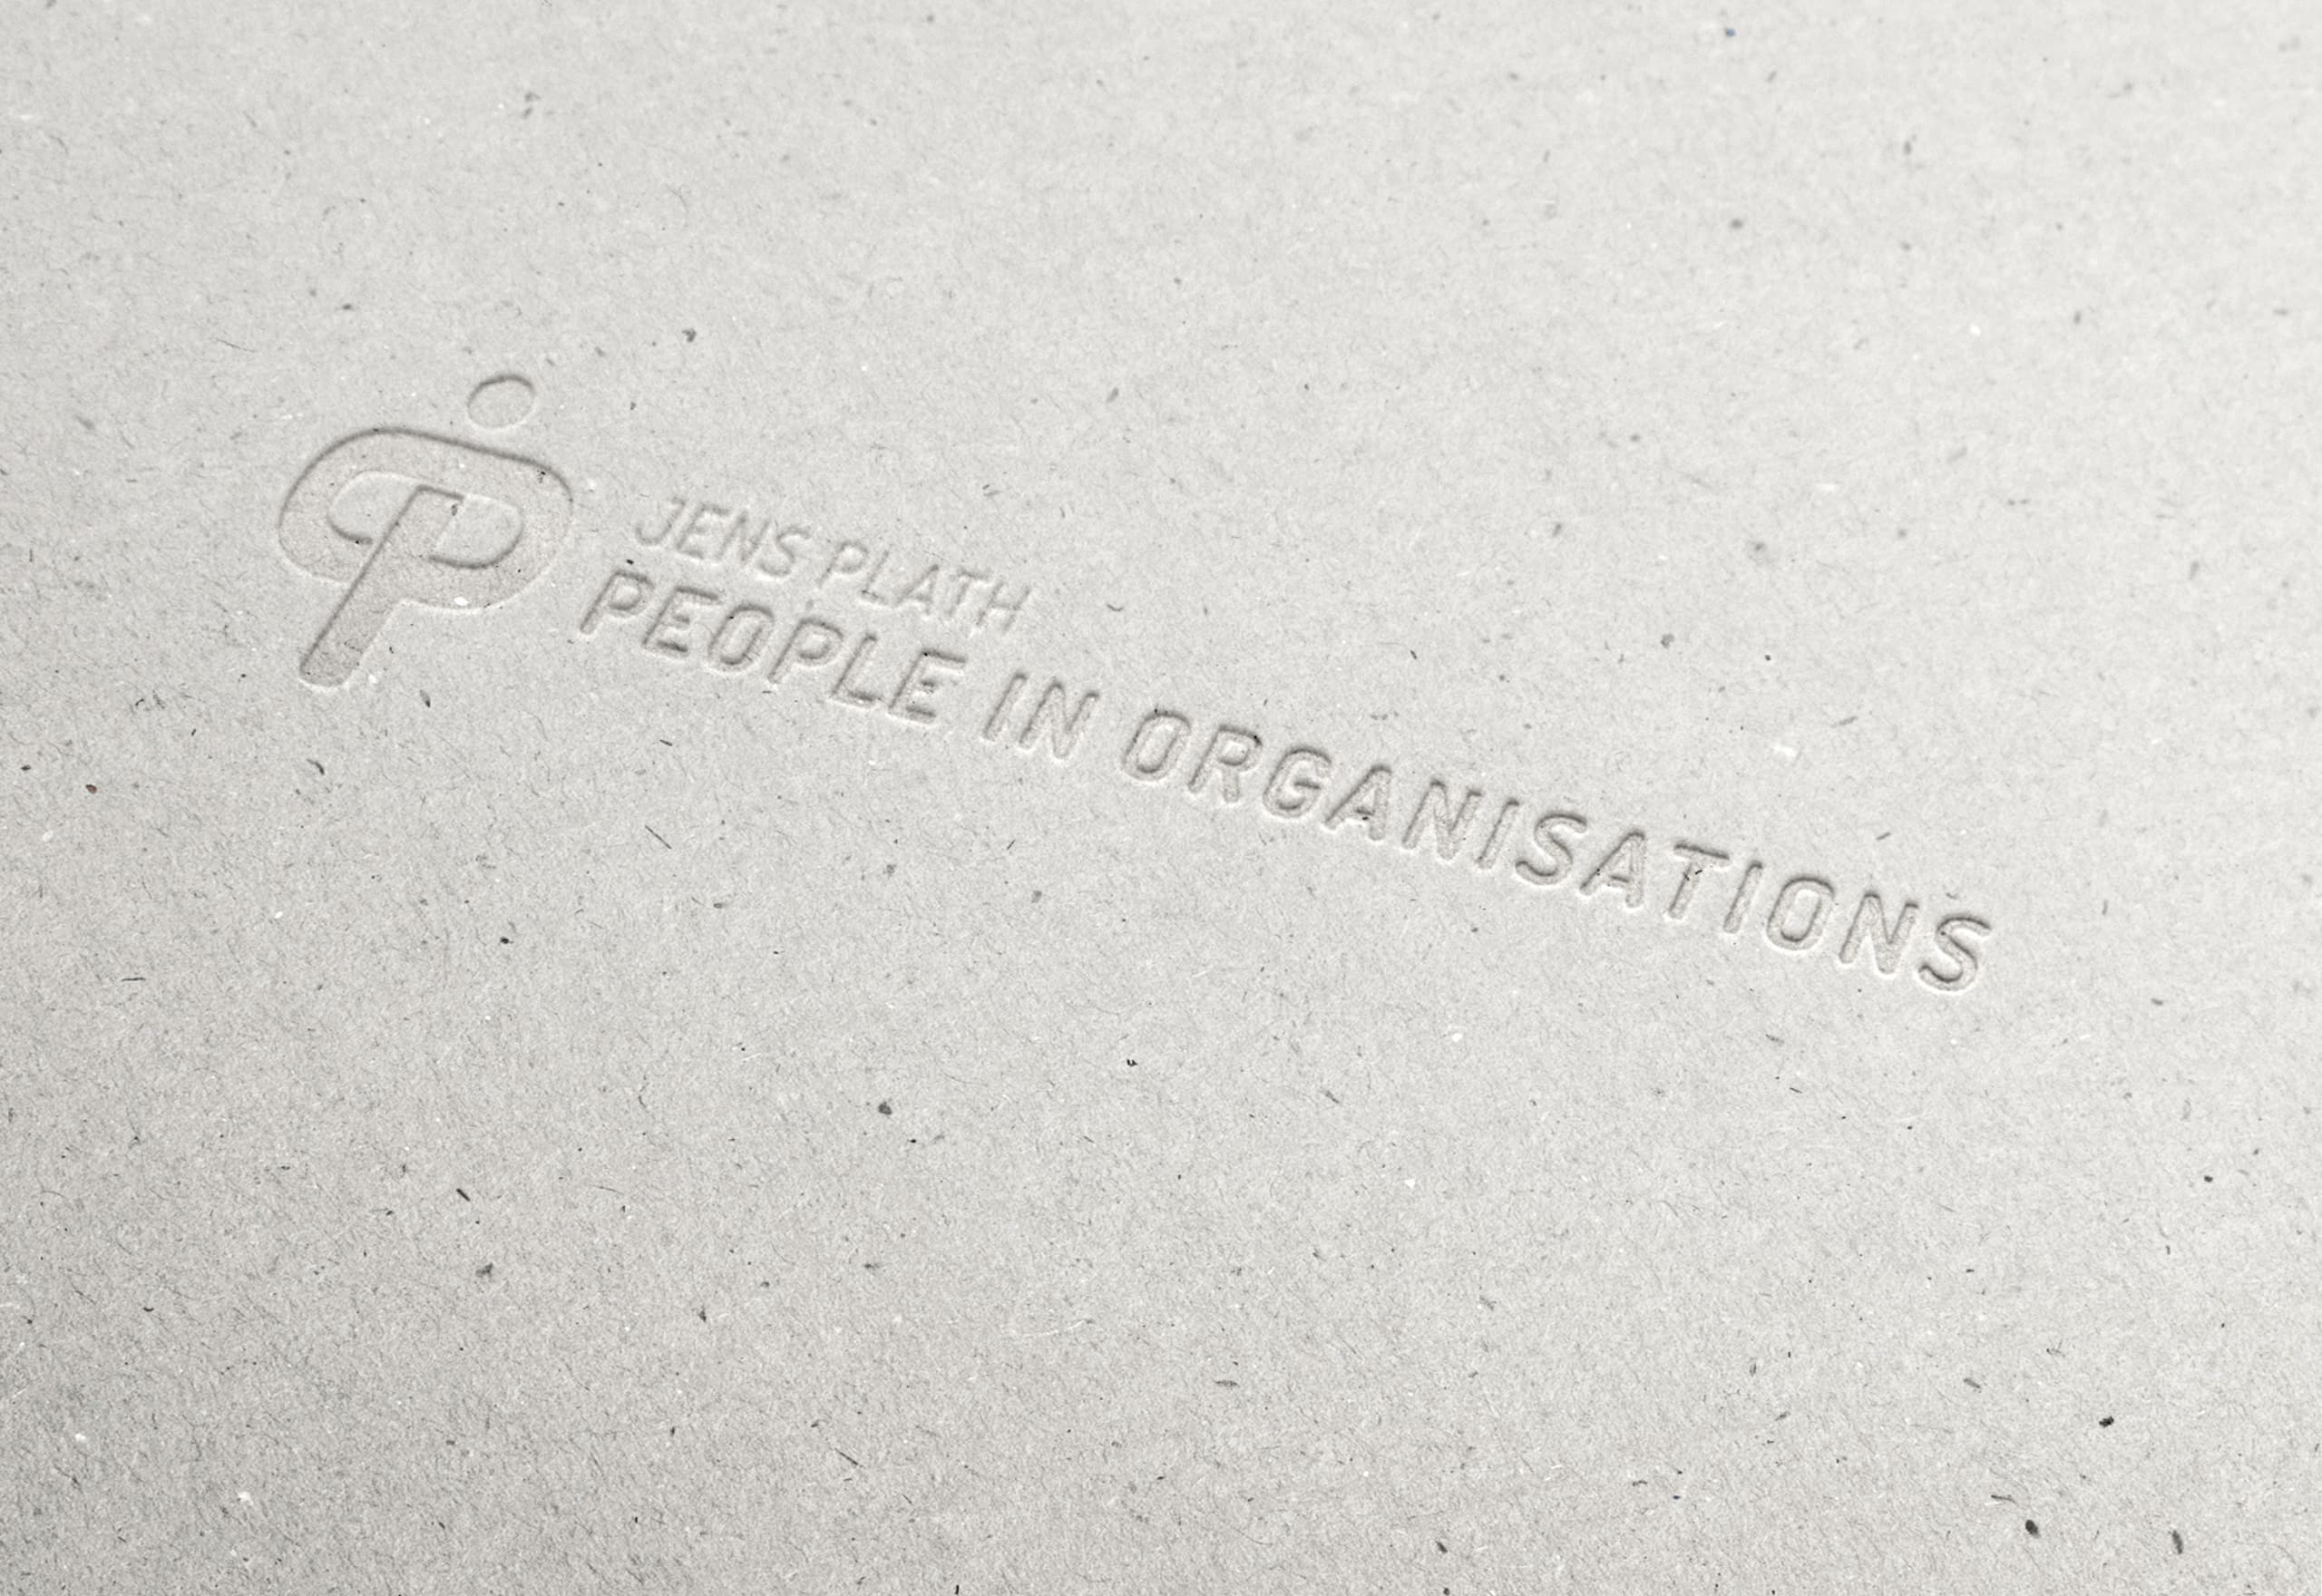 Design Jens Plath – People in Organisations